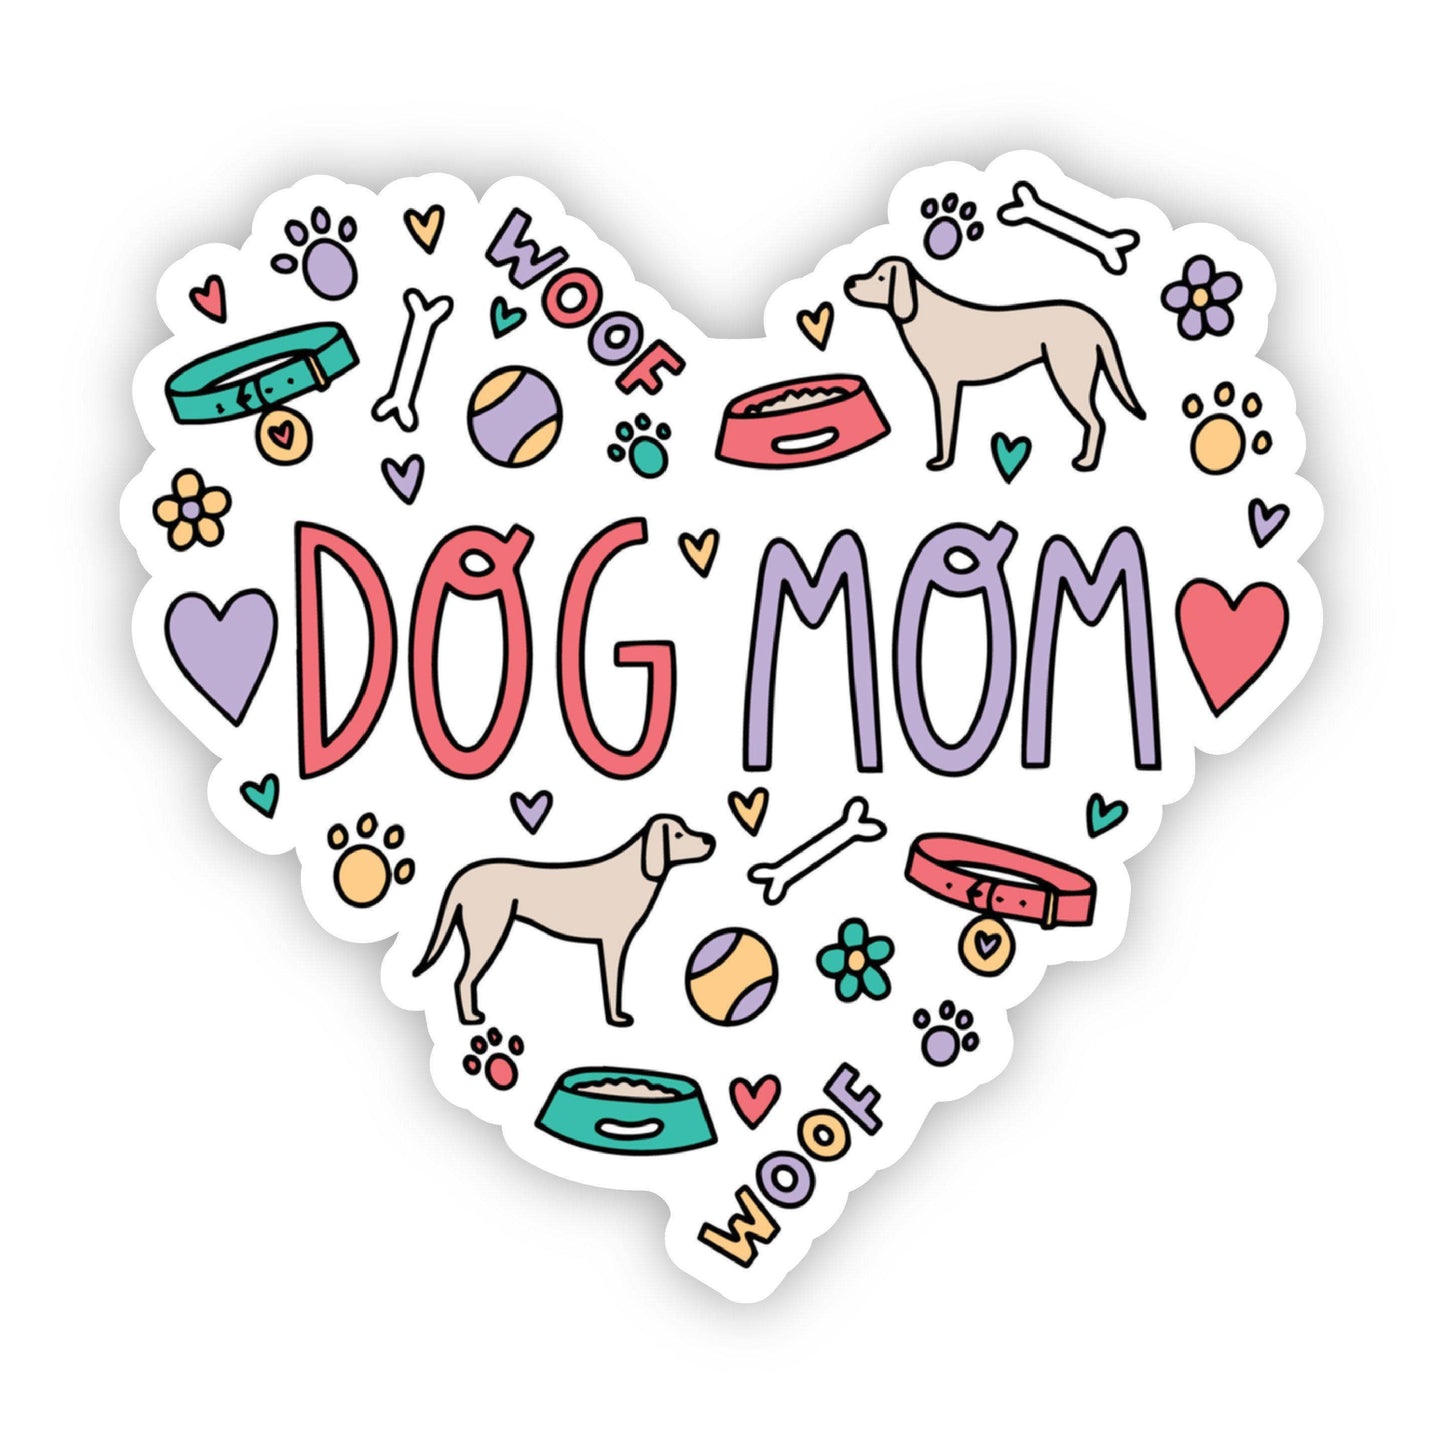 Dog Mom Heart Sticker.